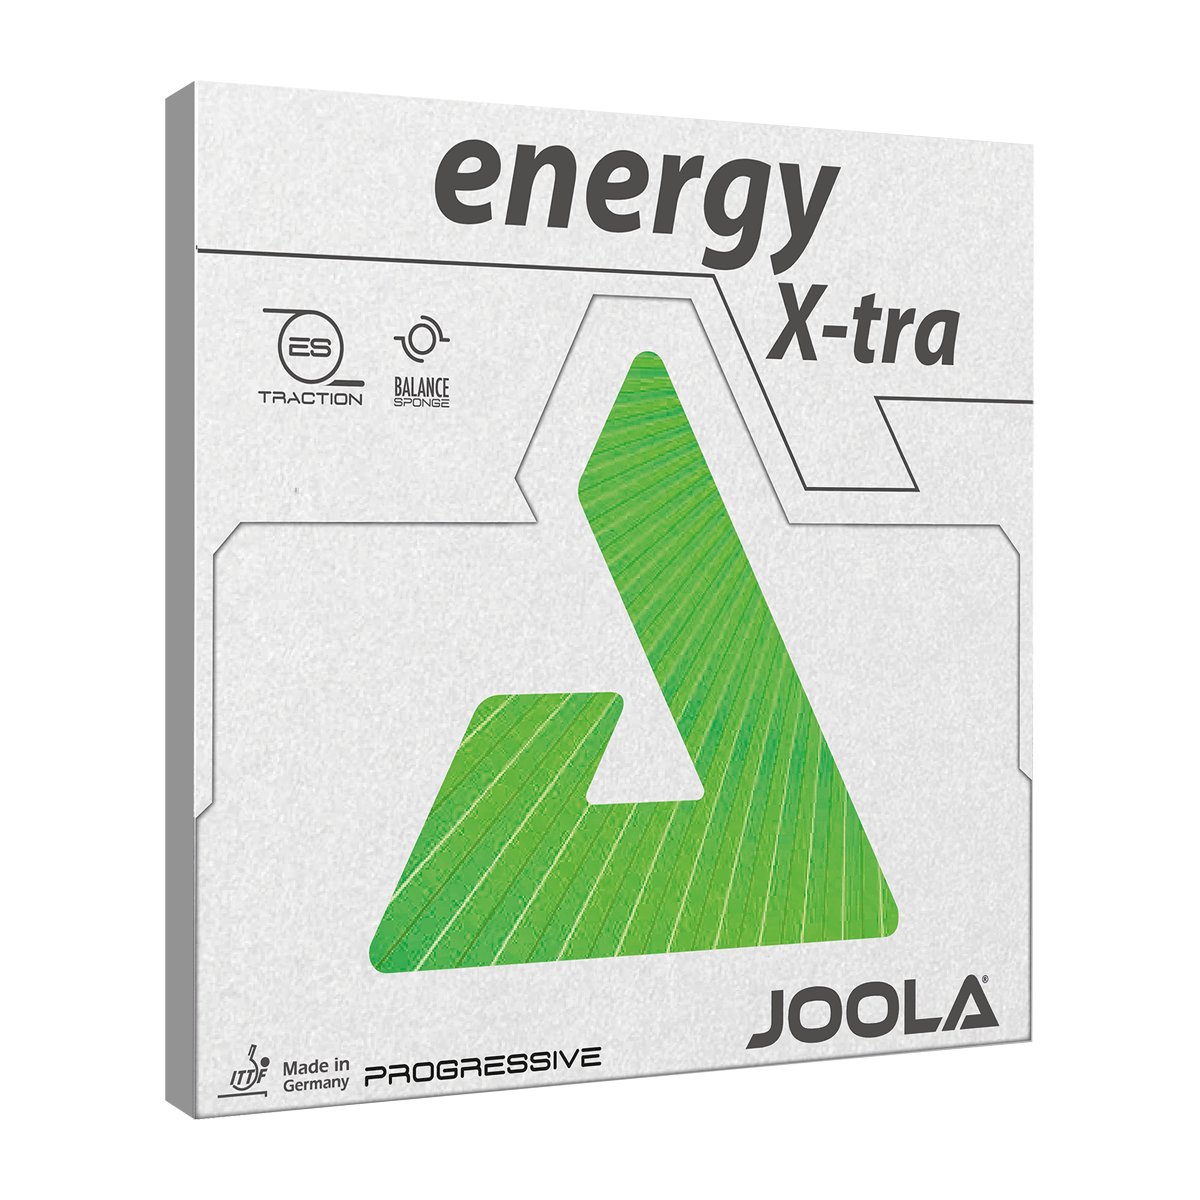 JOOLA ROSSKOPF ENERGY X-TRA TABLE TENNIS BAT BUNDLE OFFER 